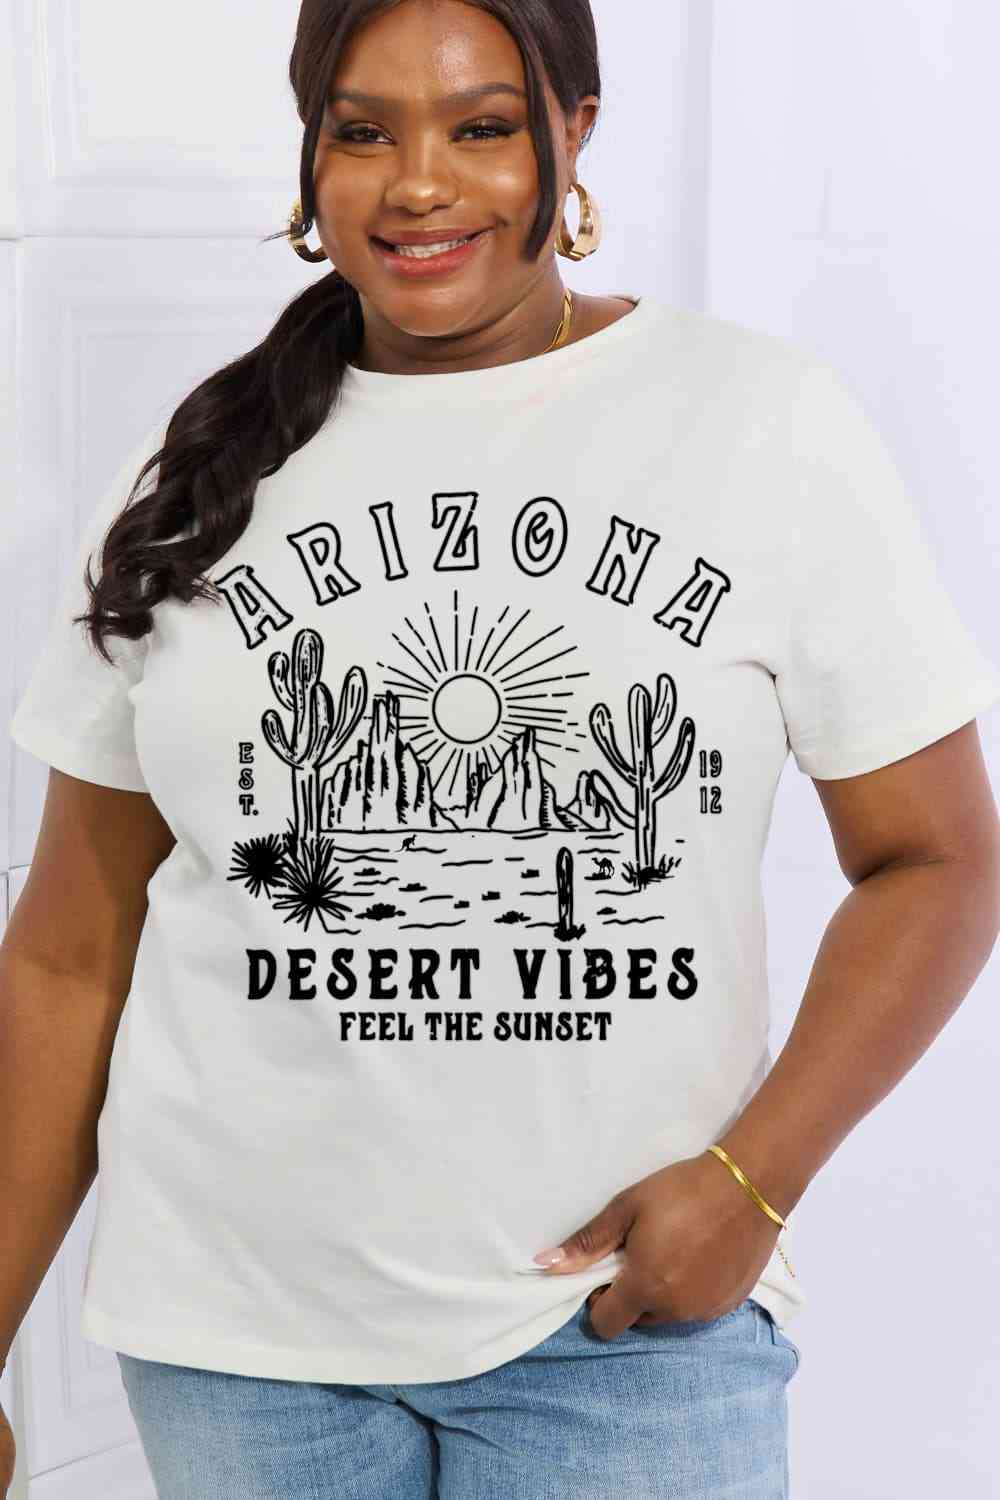 ARIZONA DESERT VIBES FEEL THE SUNSET Graphic Cotton Tee - White / S - T-Shirts - Shirts & Tops - 7 - 2024